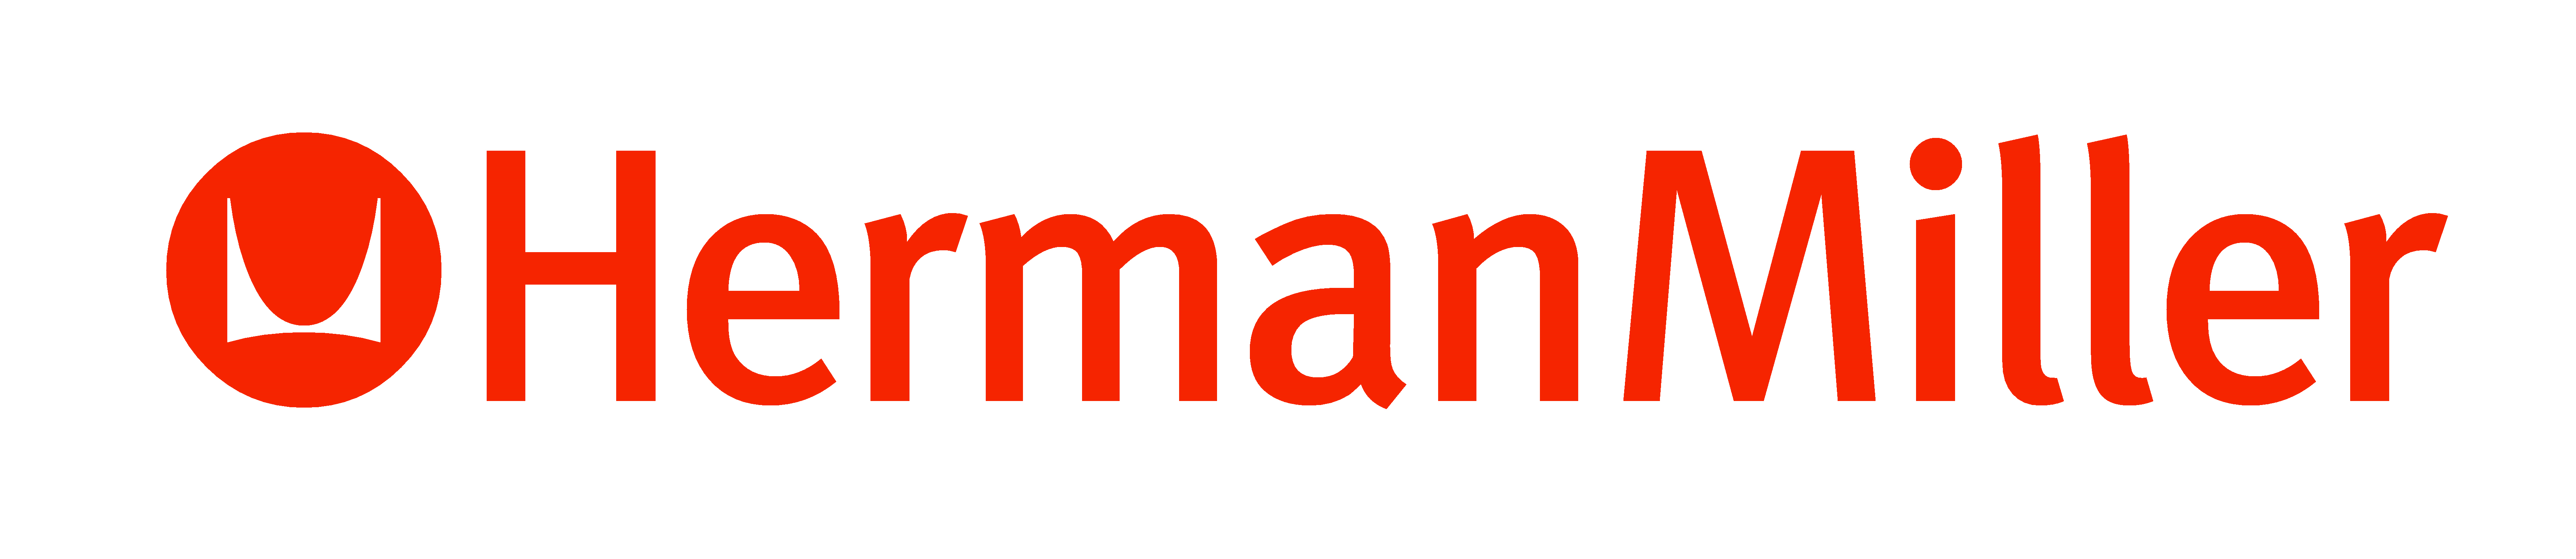 Herman Miller, Inc.